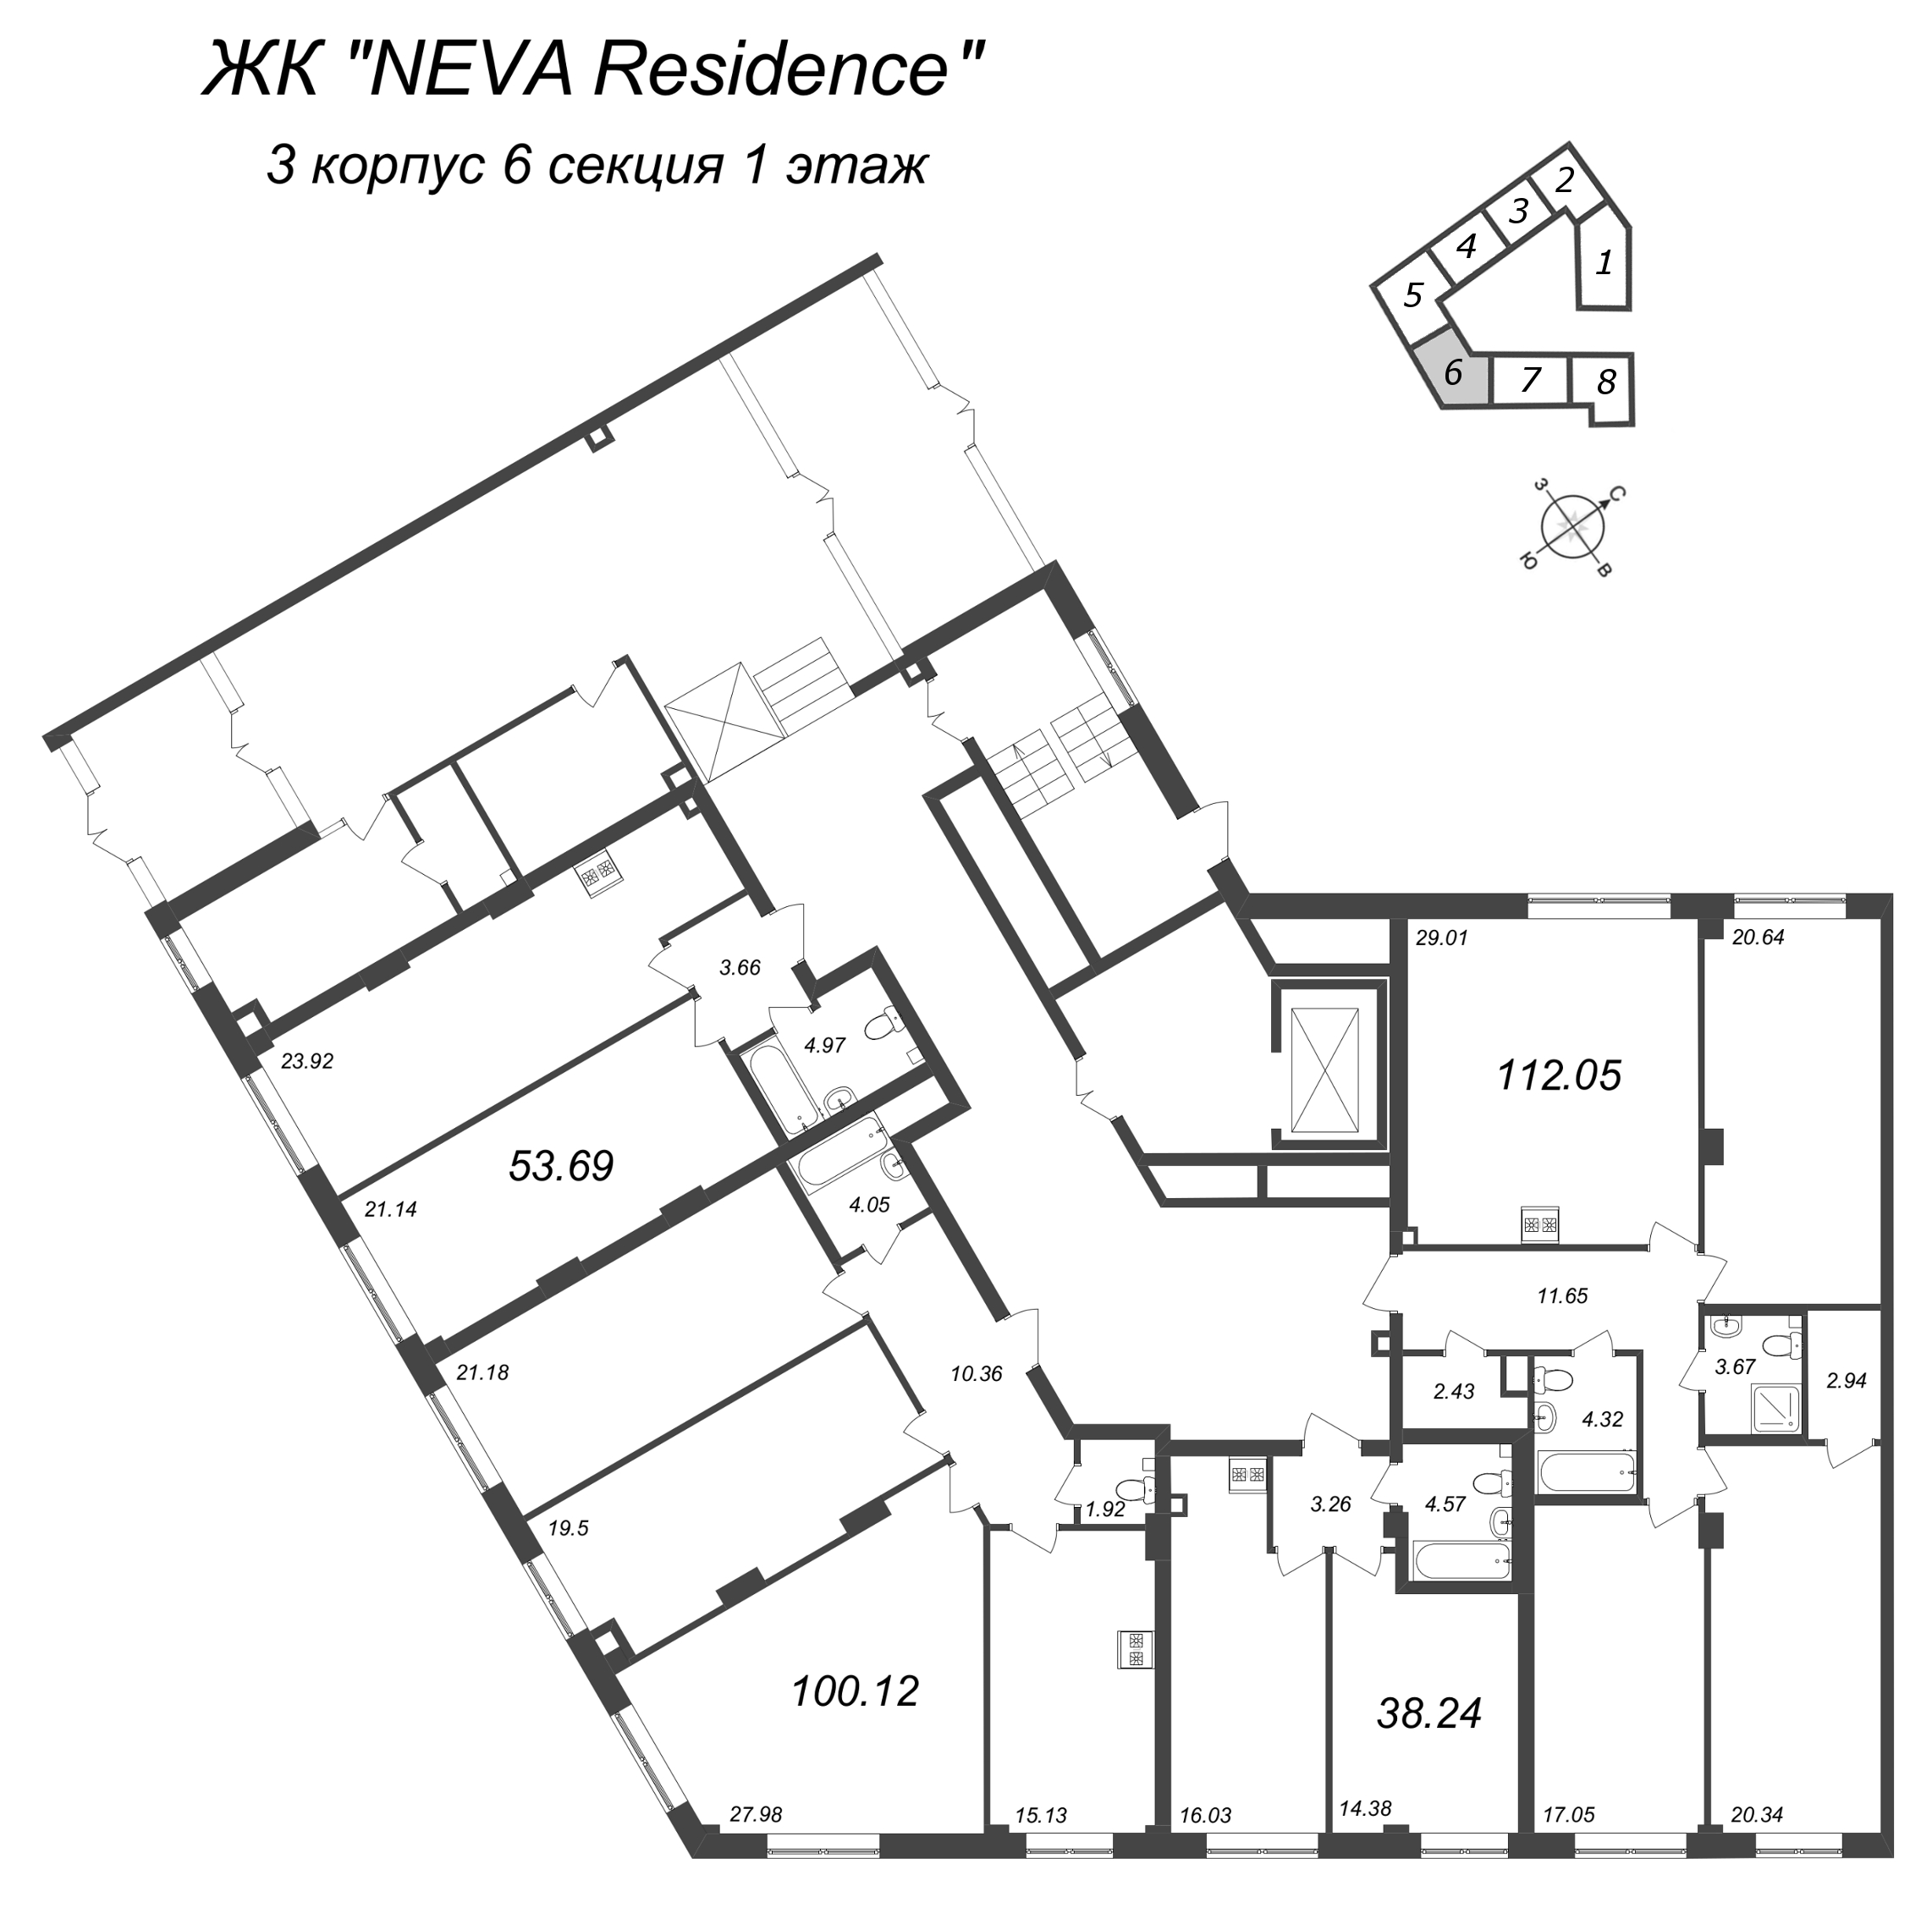 4-комнатная (Евро) квартира, 112.05 м² - планировка этажа